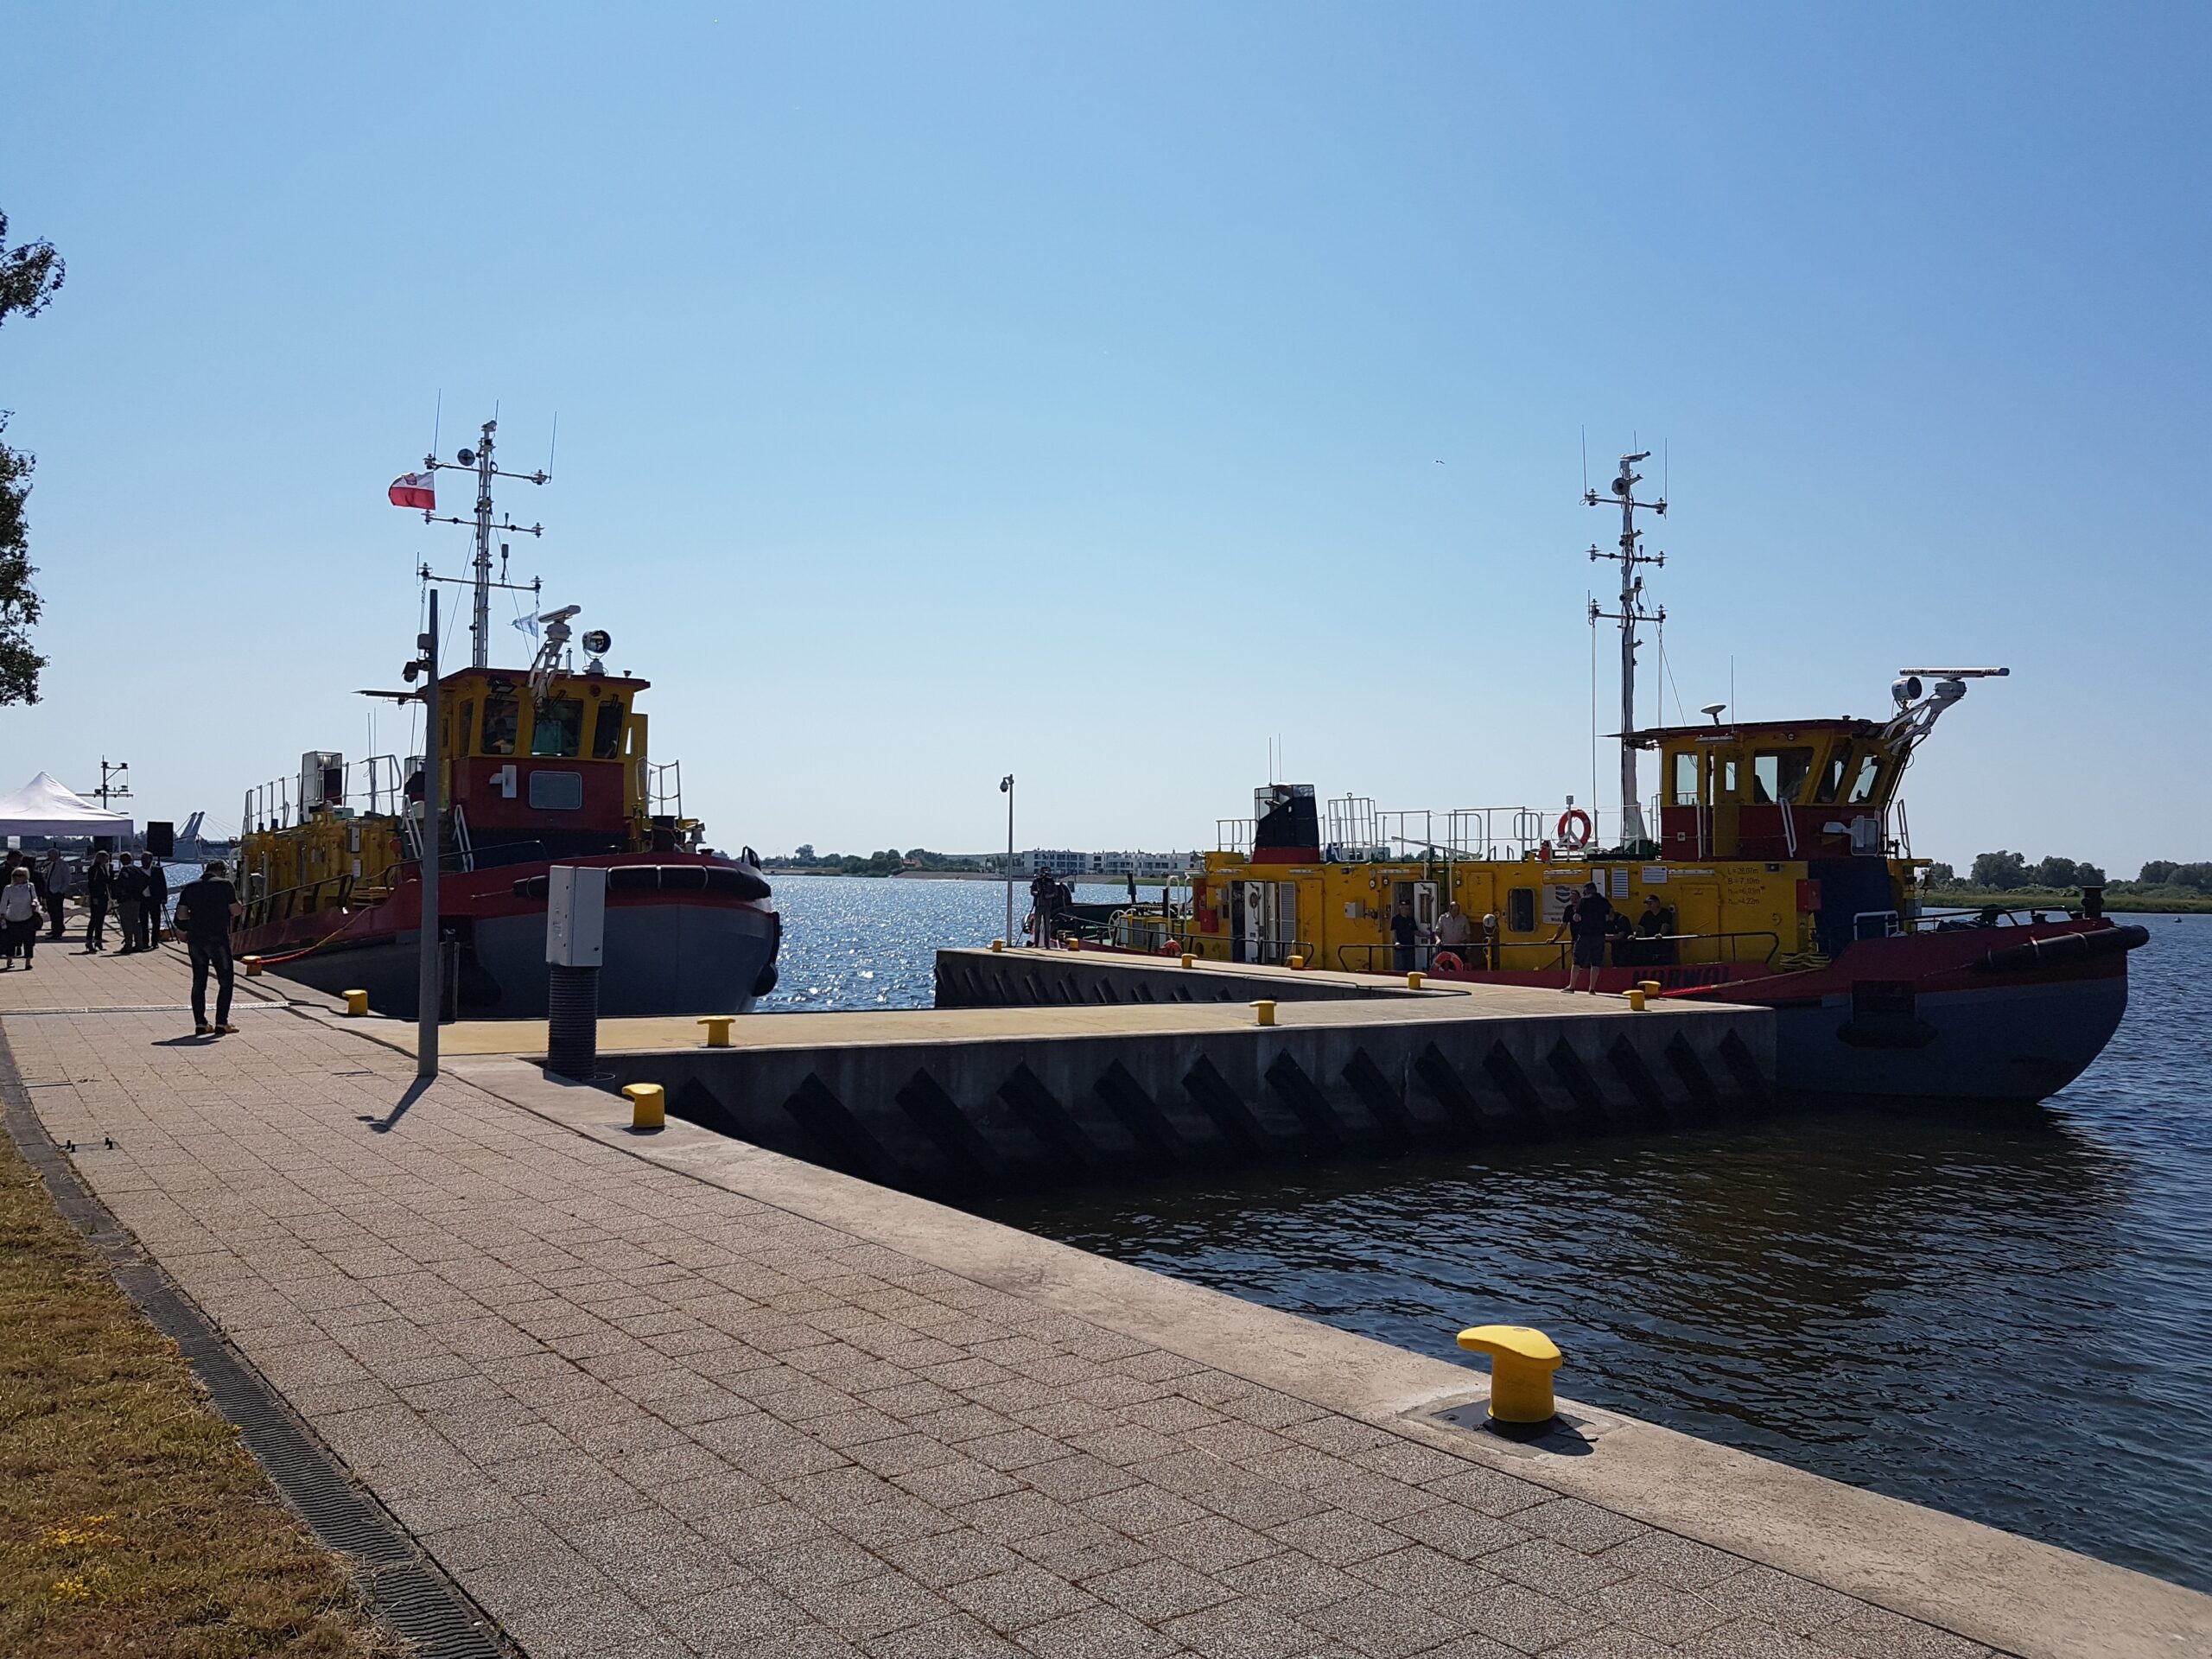 New icebreakers on the Lower Vistula River